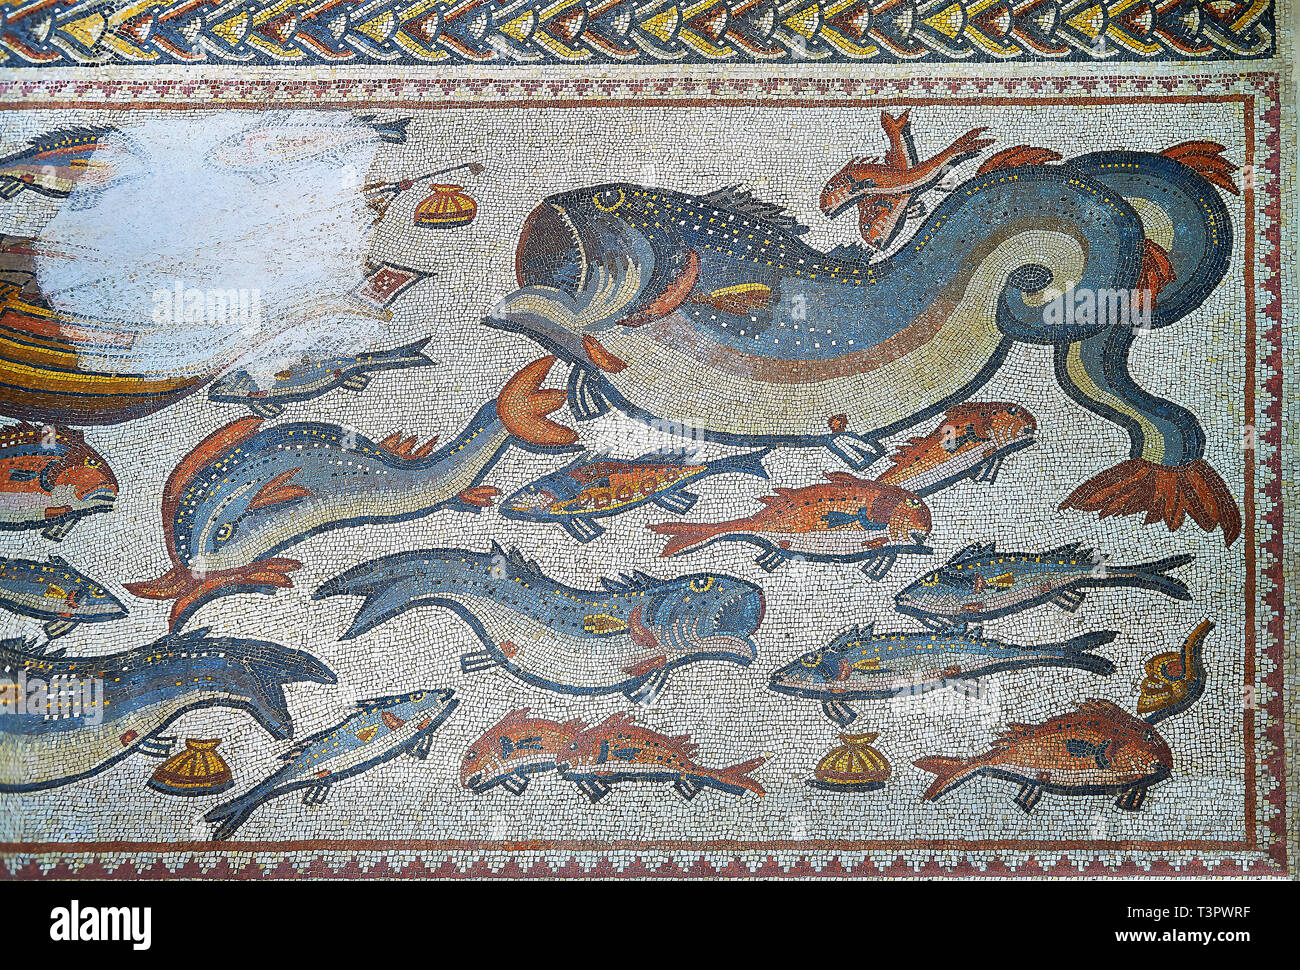 Fish and marine life from the 3rd century Roman mosaic villa floor from Lod, near Tel Aviv, Israel. The Roman floor mosaic of Lod is the largest and b Stock Photo